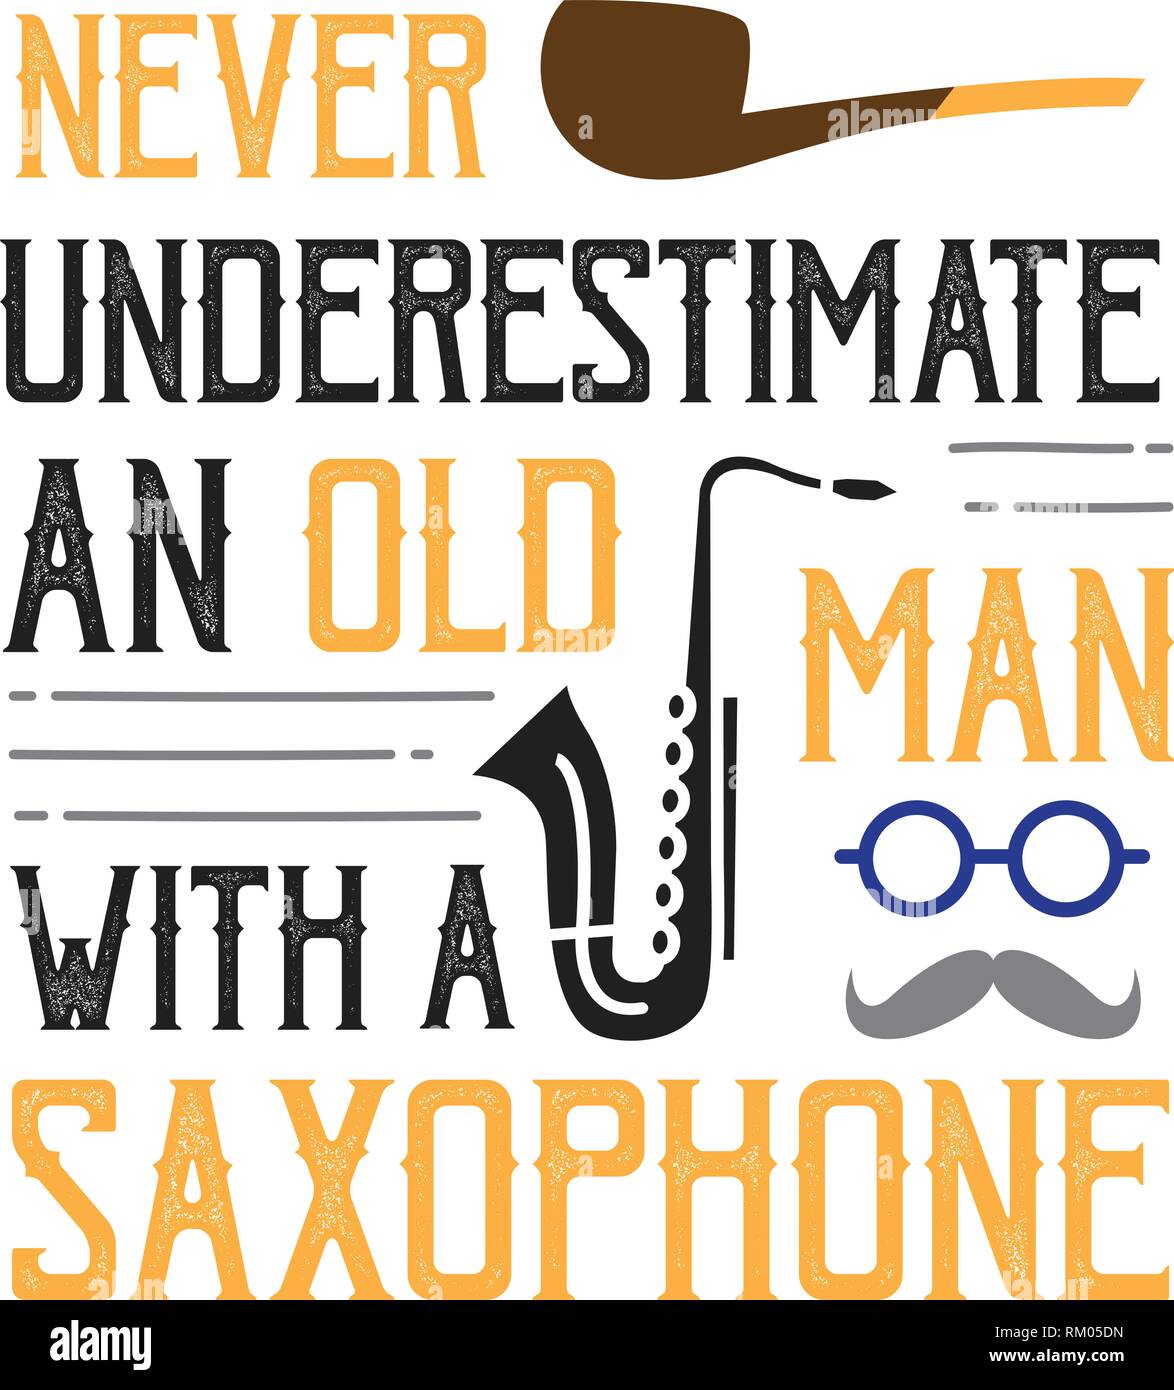 funny saxophone quotes